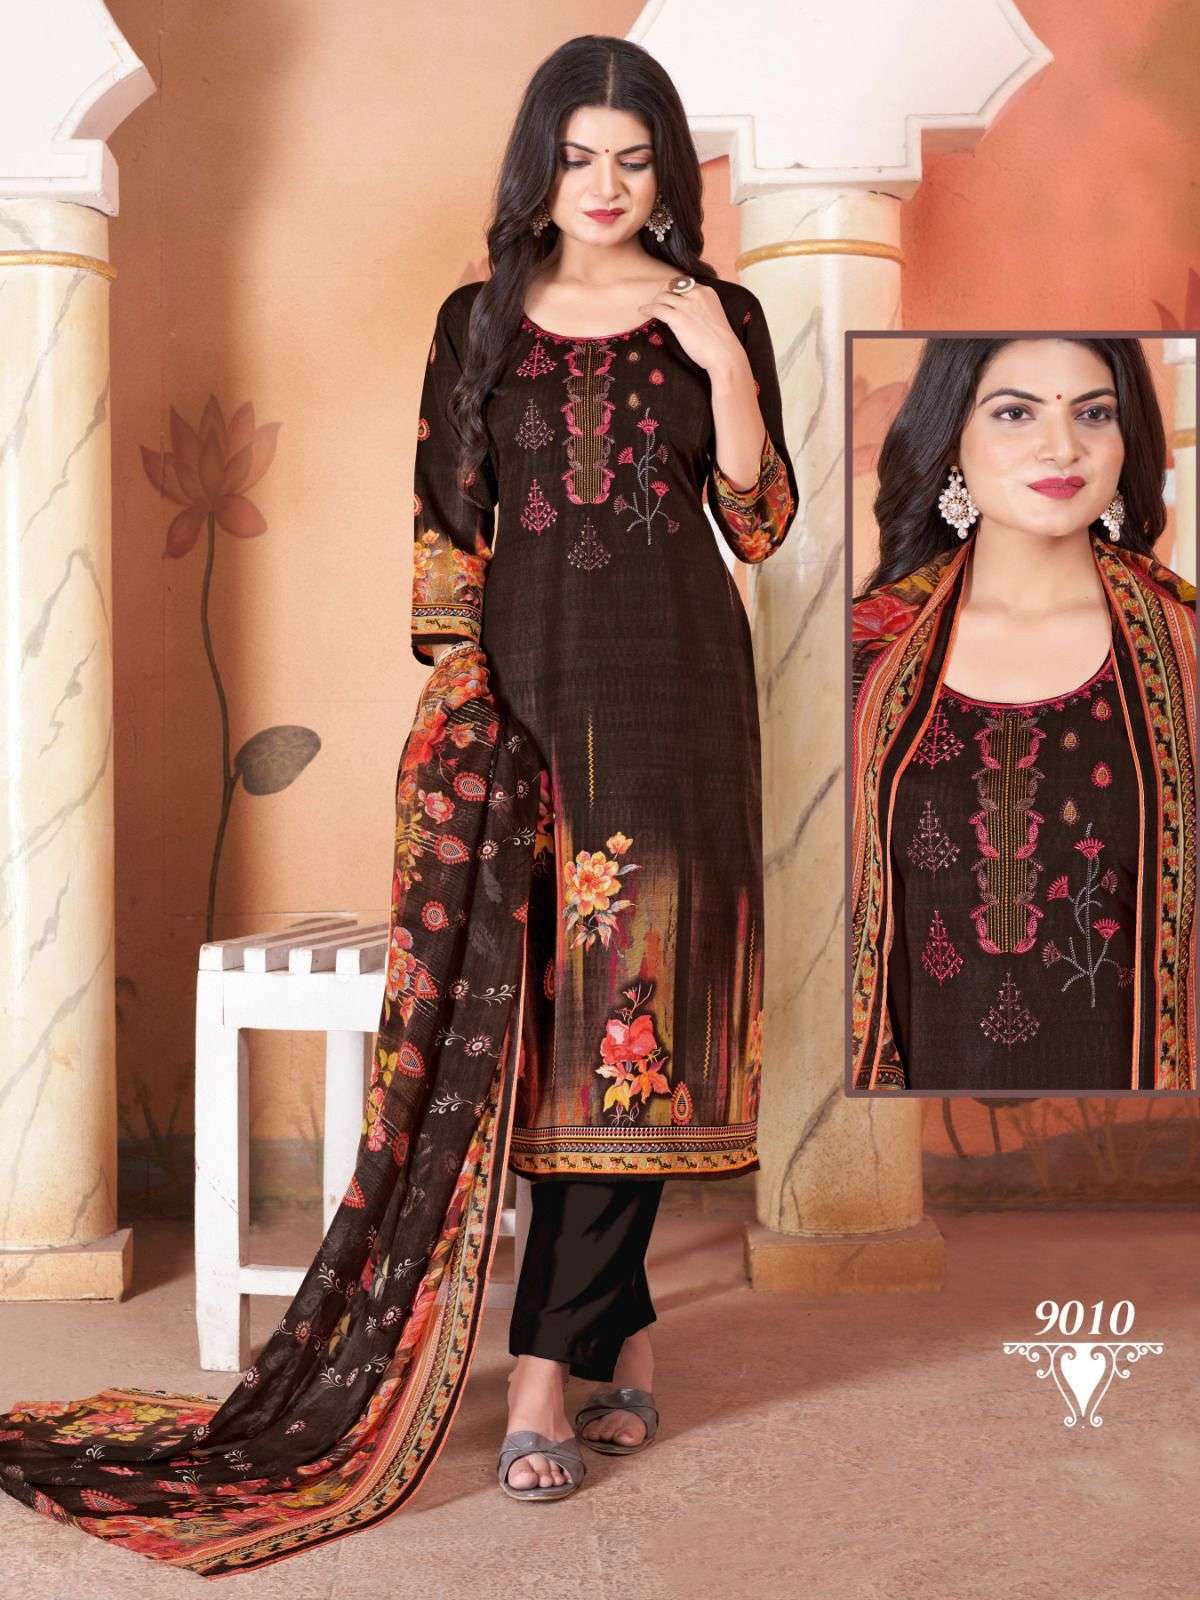 shiv gori silk mills fillauri vol-9 unstitched designer salwar kameez catalogue wholesale price surat 